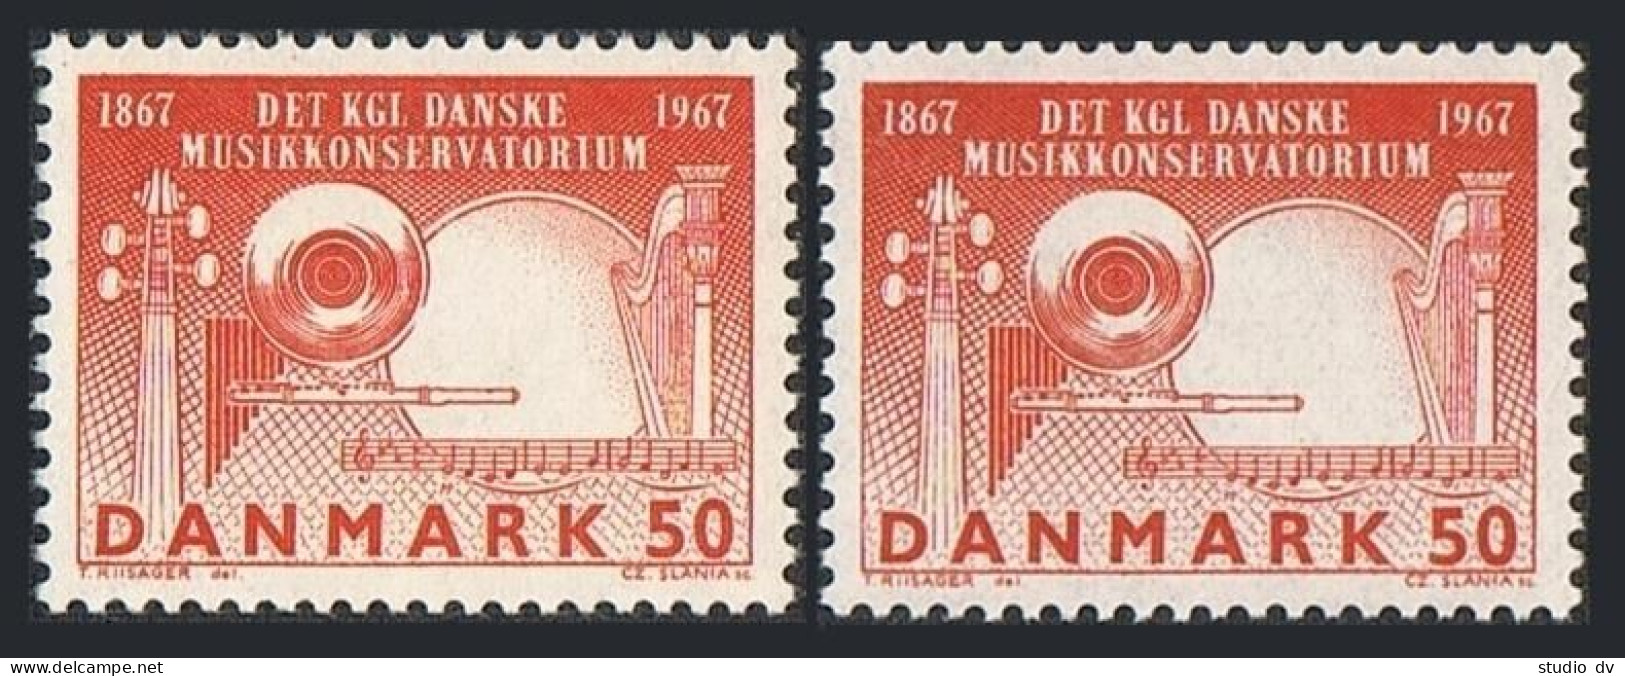 Denmark 430 Two Var, MNH. Michel 449x-449y. Royal Danish Academy Of Music, 1967. - Ongebruikt